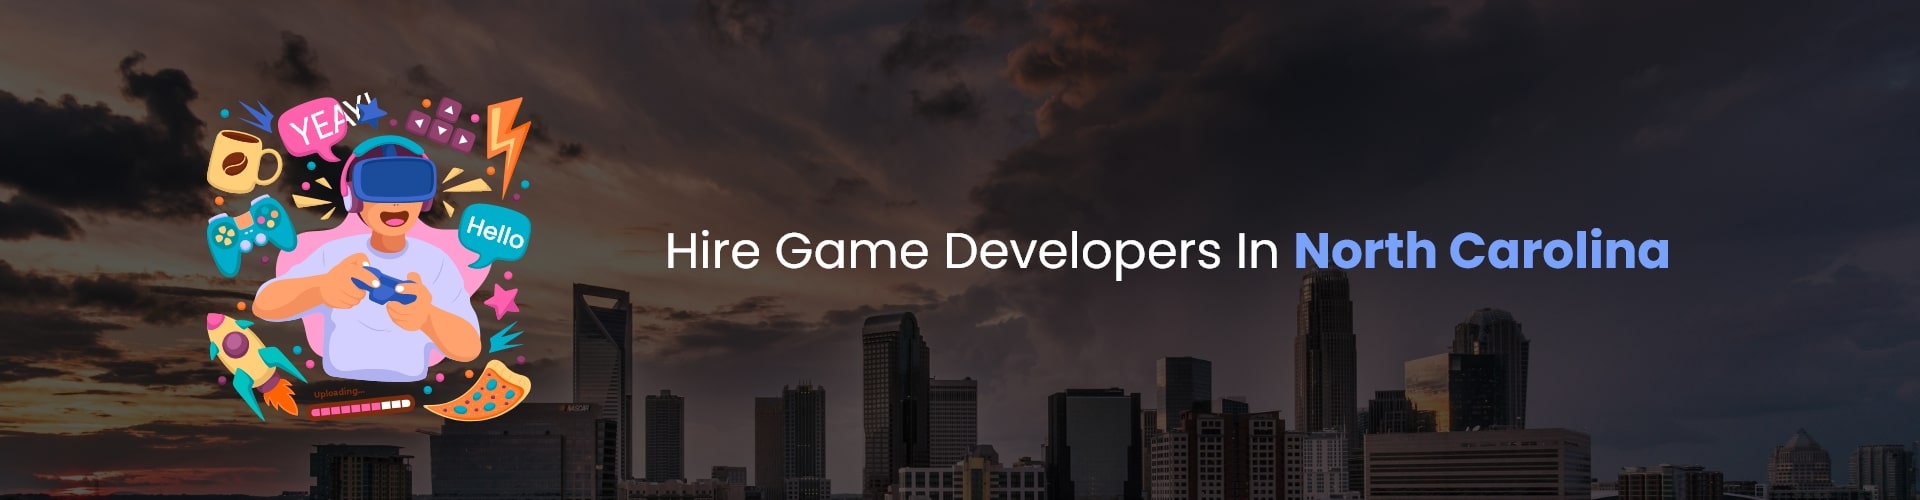 hire game developers in north carolina